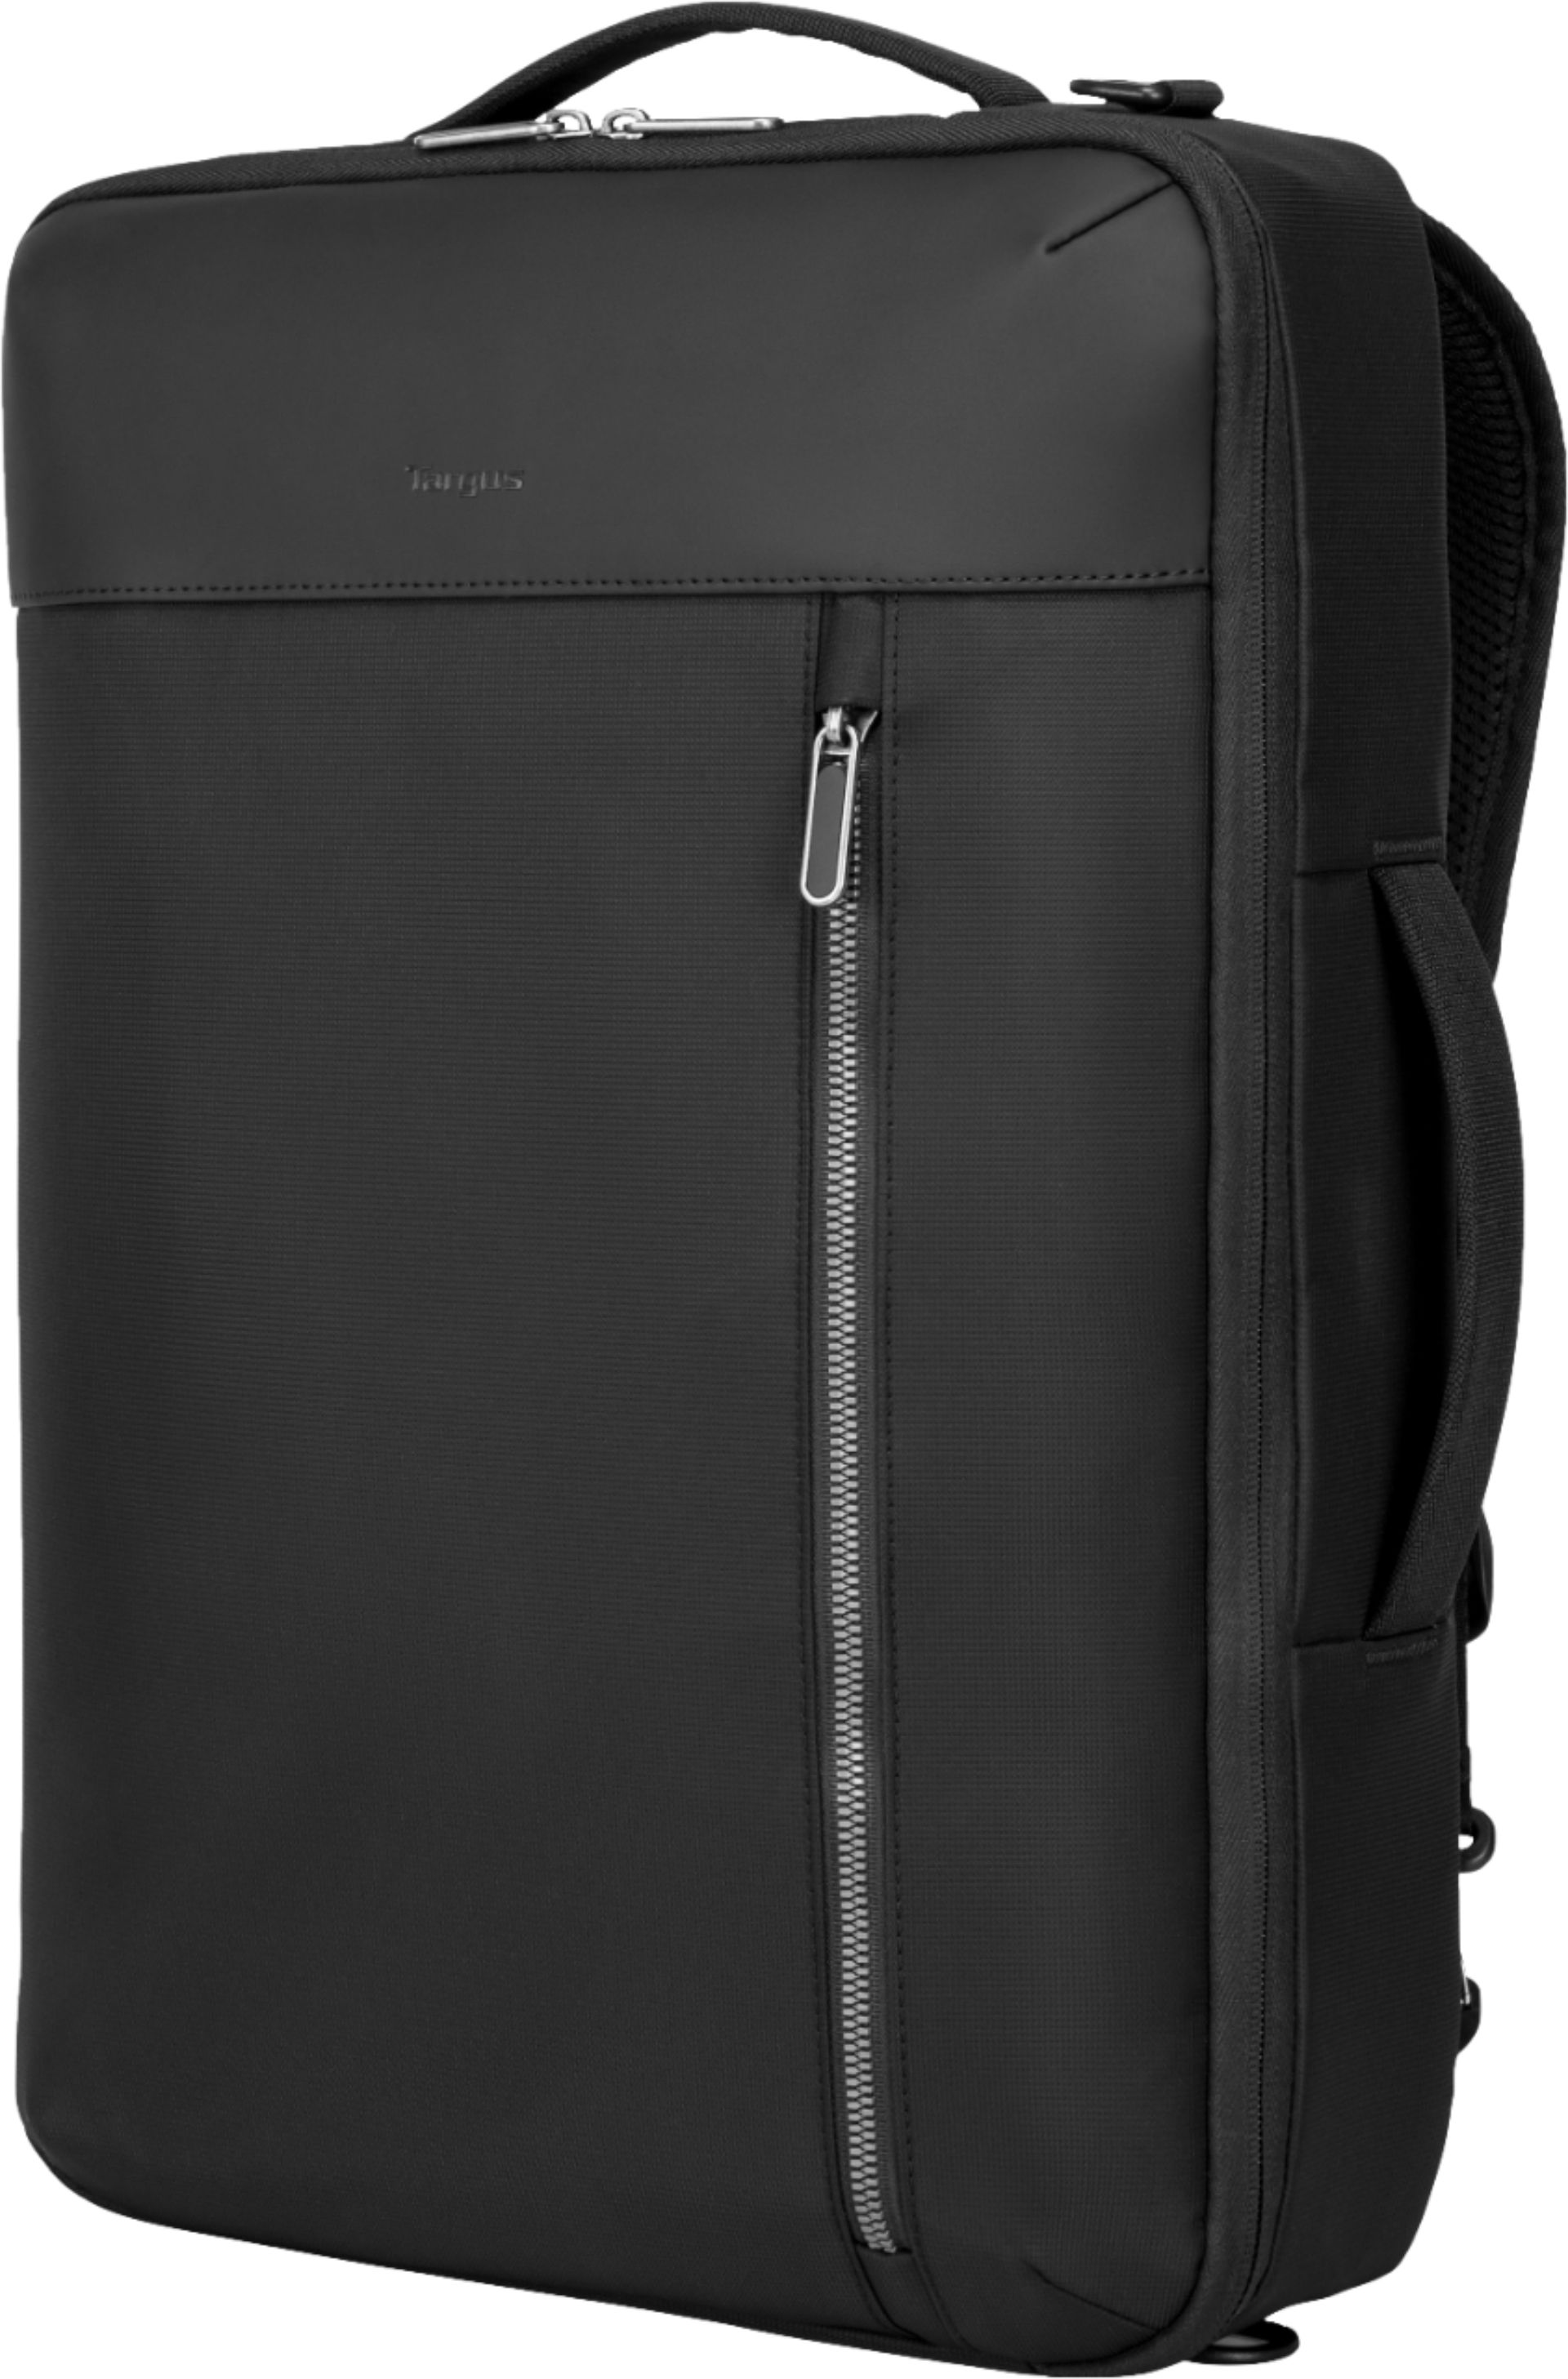 Xiaomi Mochila Backpack Mi Urban Backpack para Laptop de 15,6